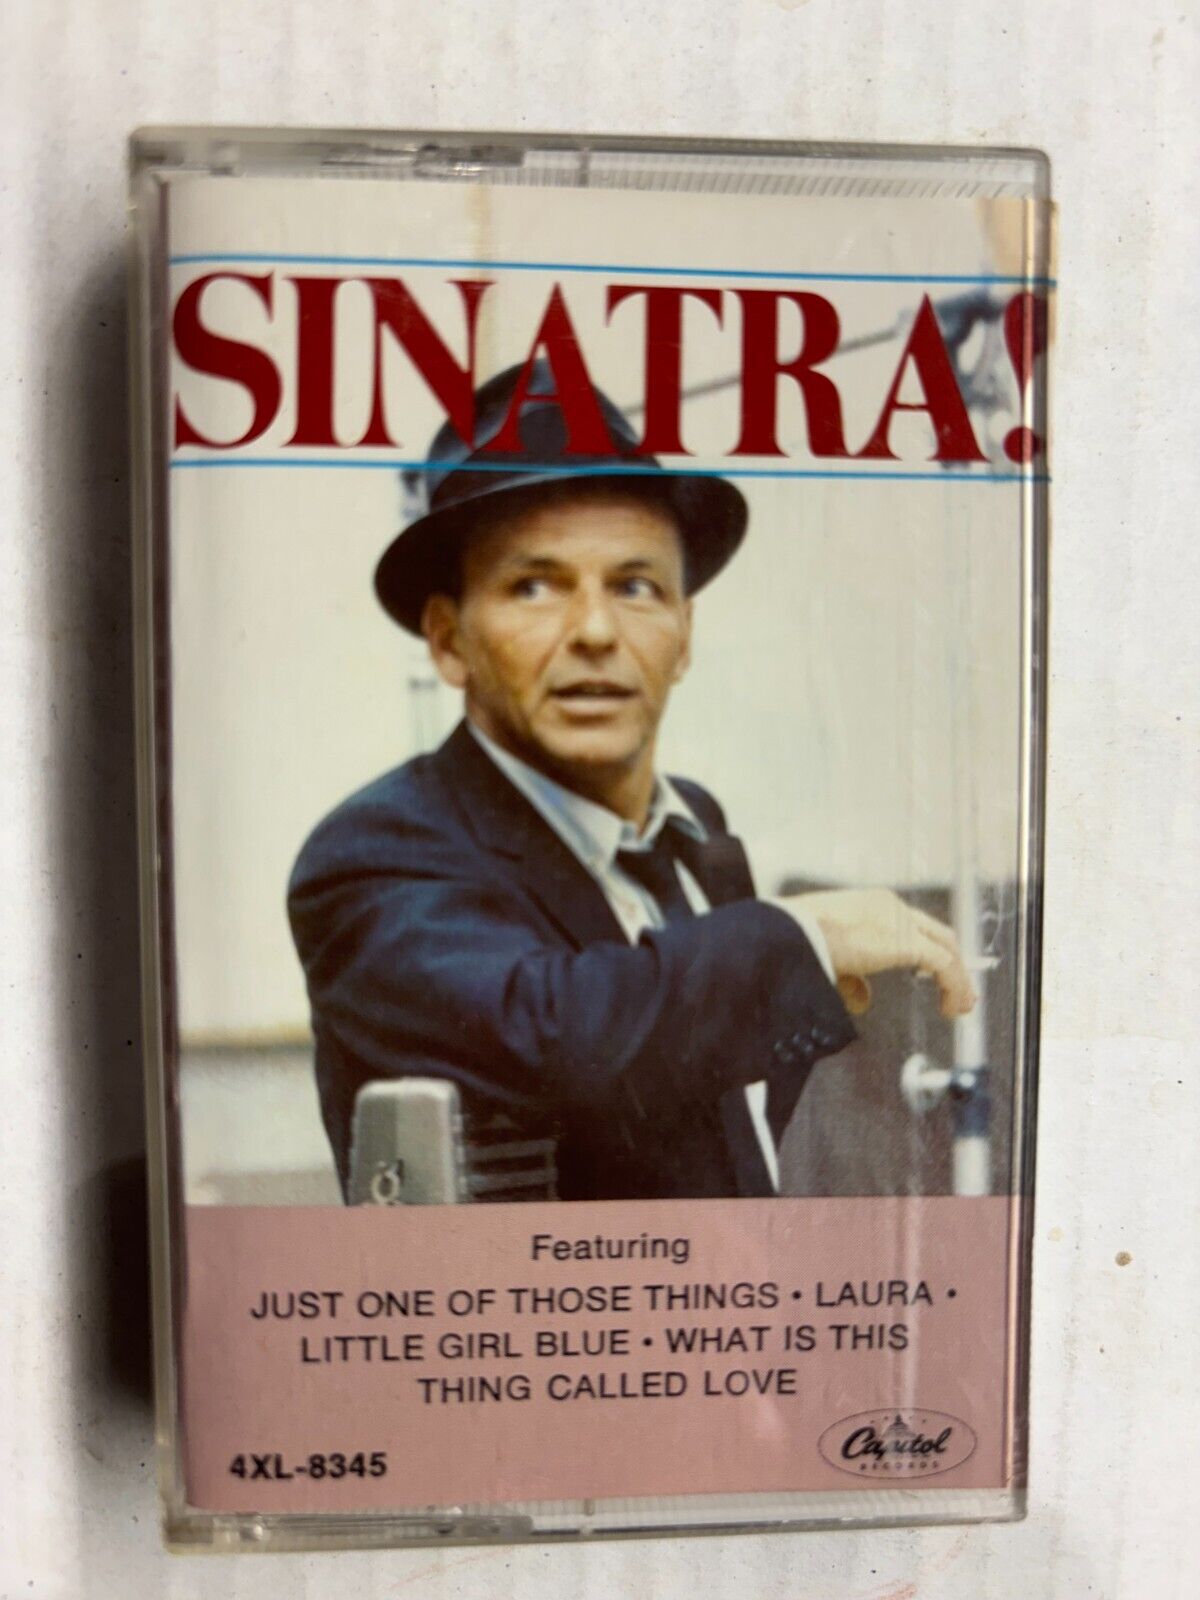 Frank Sinatra - Sinatra!  - Cassette Tape